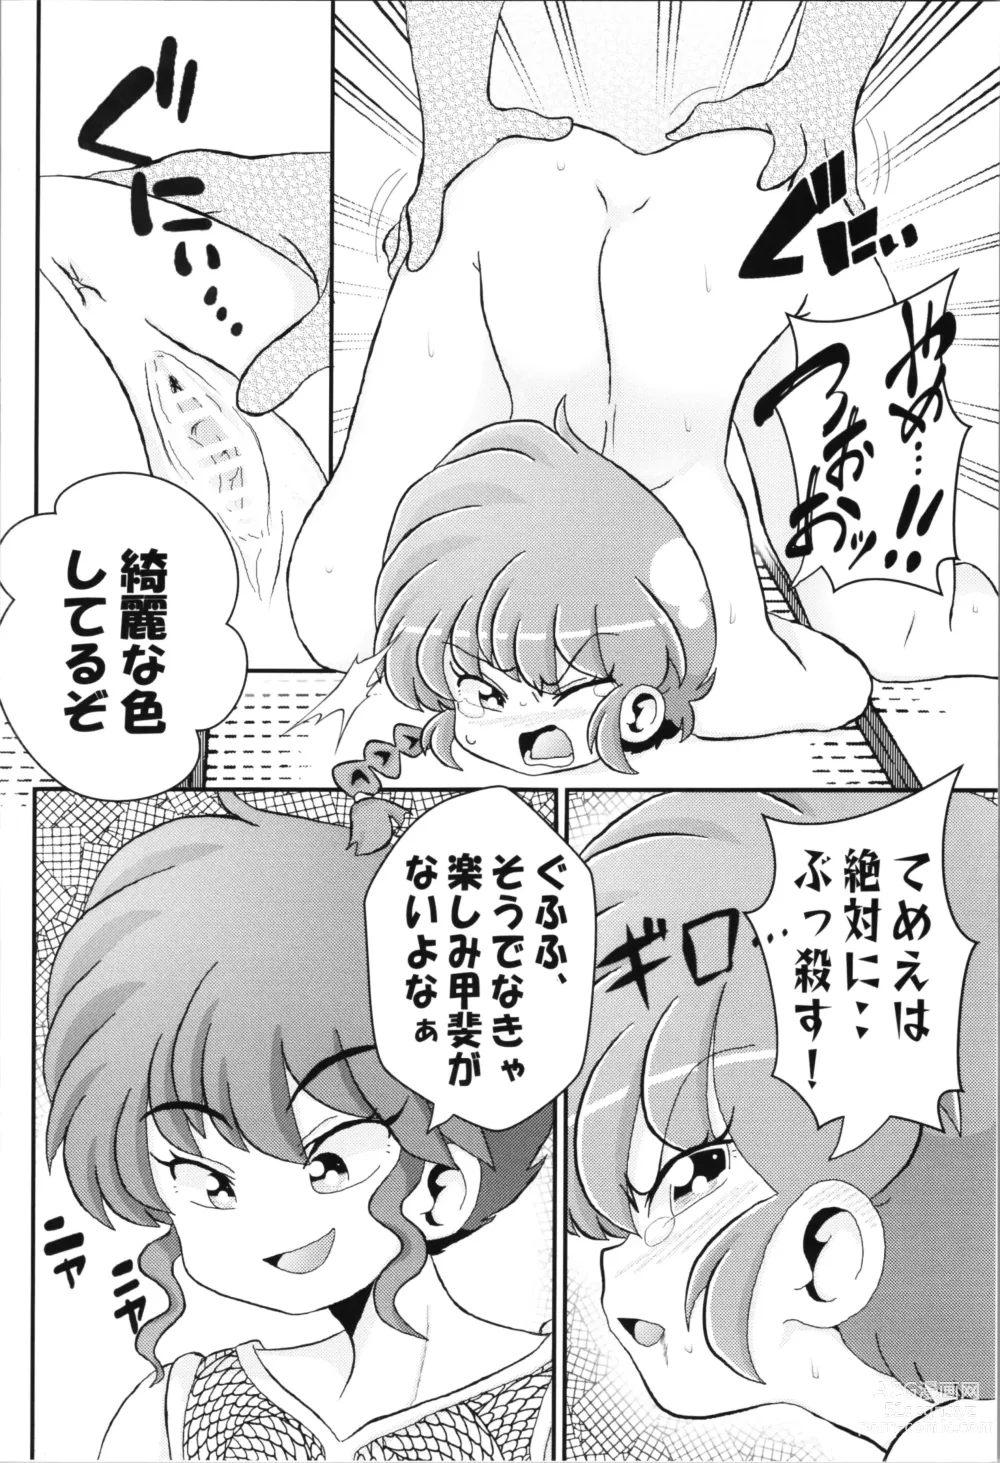 Page 12 of doujinshi You Too!